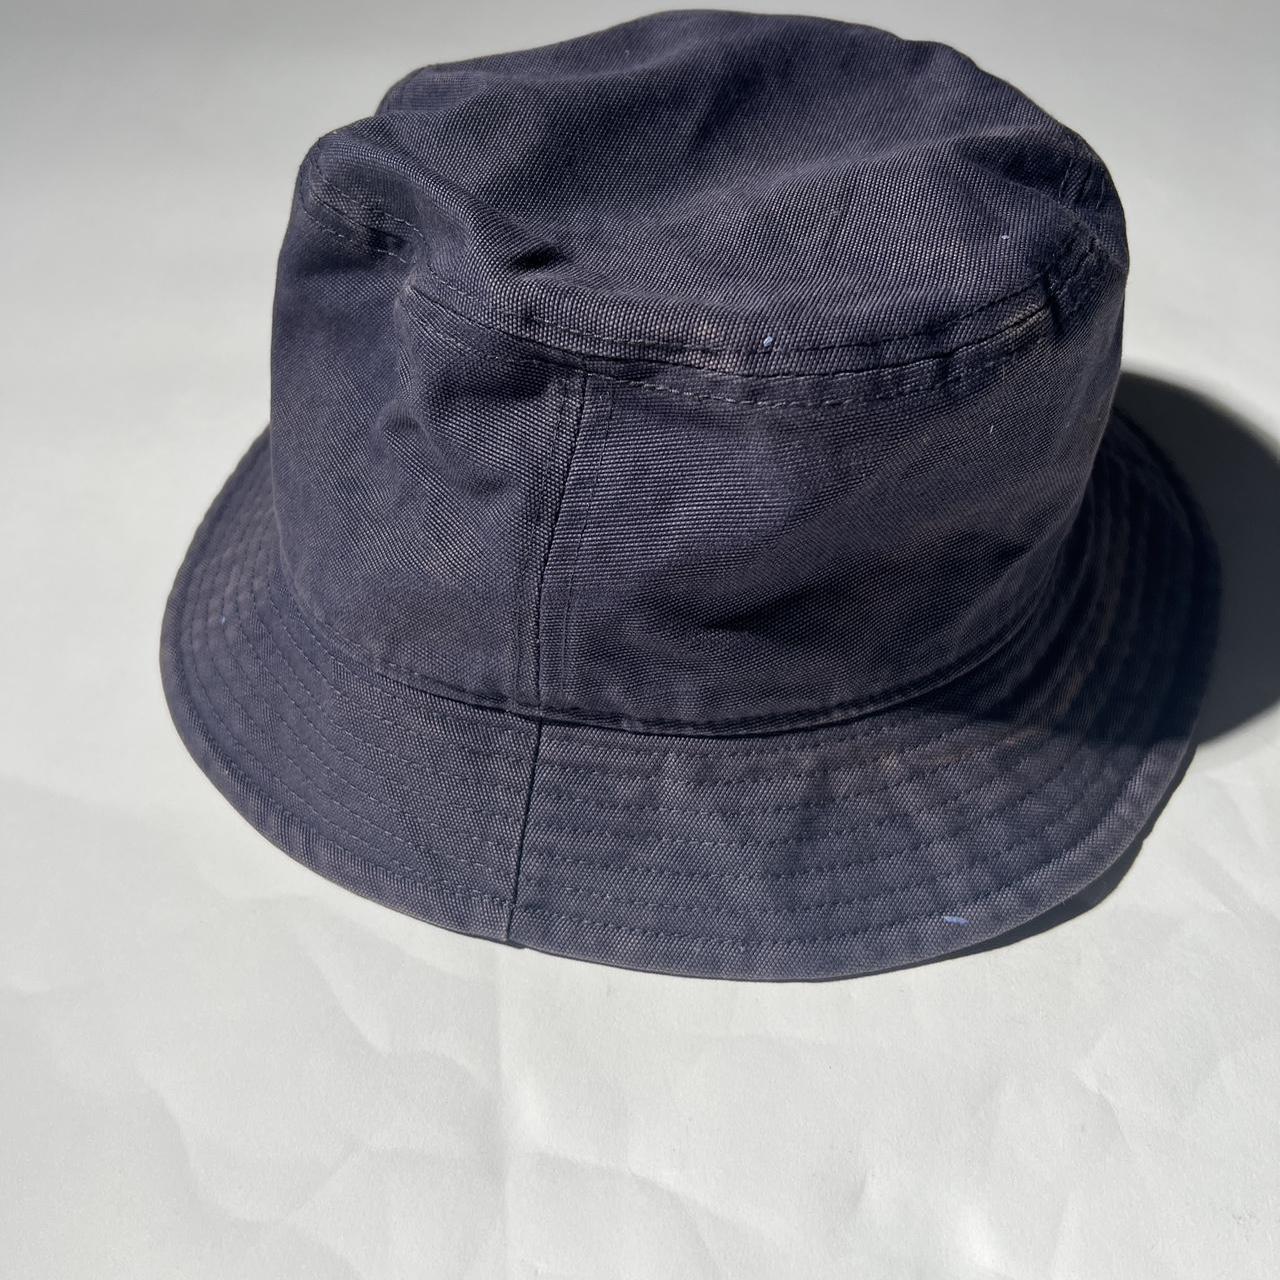 Acne Studios Men's Blue and Navy Hat - 4